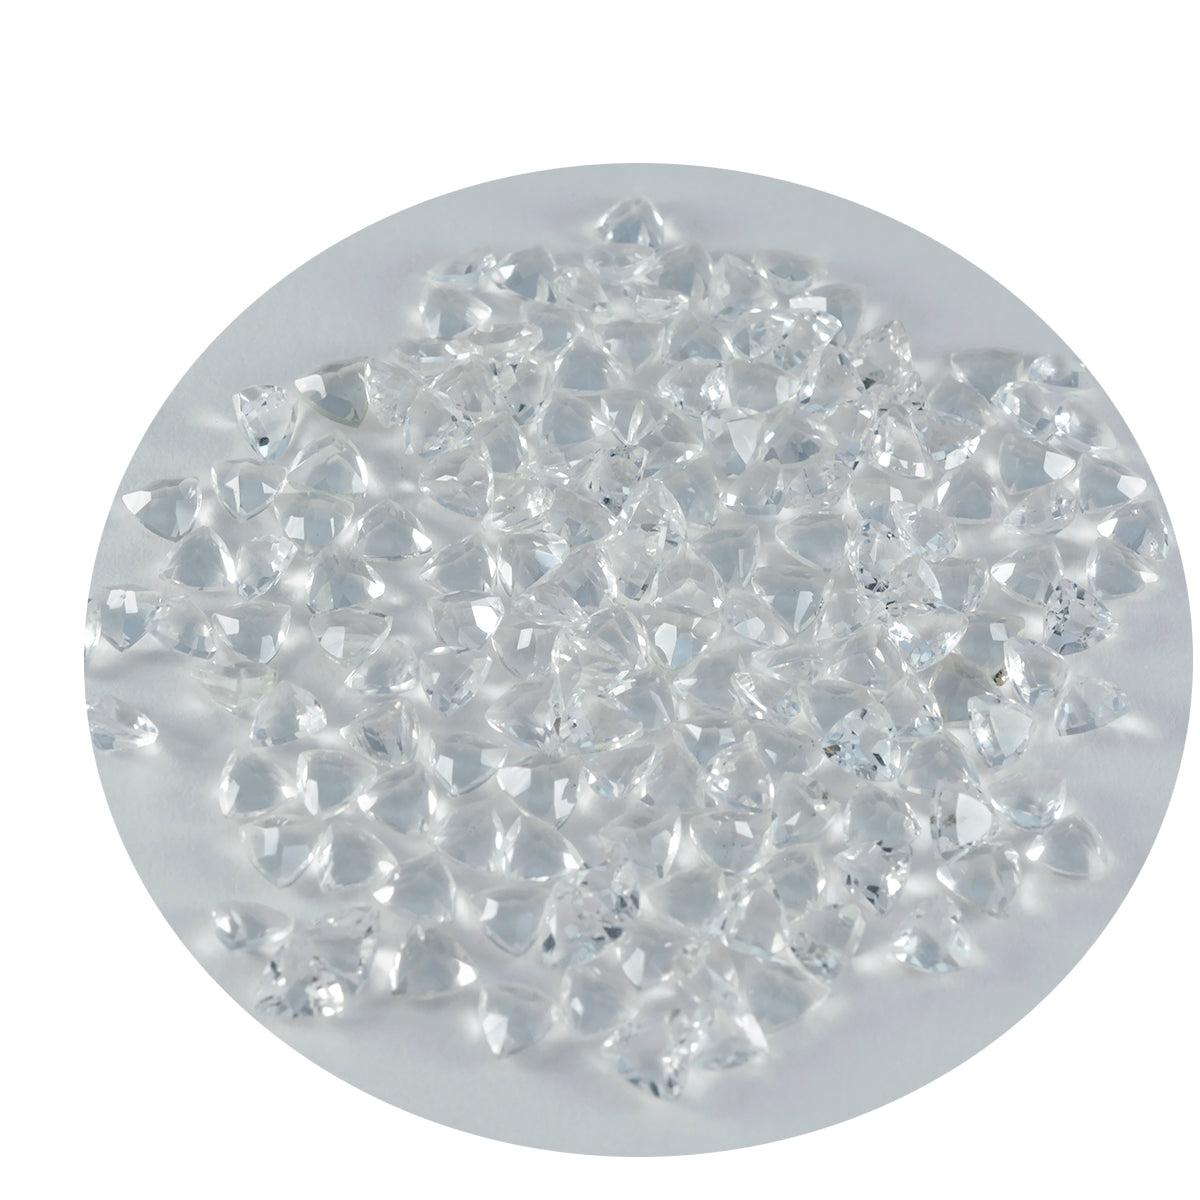 Riyogems 1PC White Crystal Quartz Faceted 4x4 mm Trillion Shape startling Quality Gem